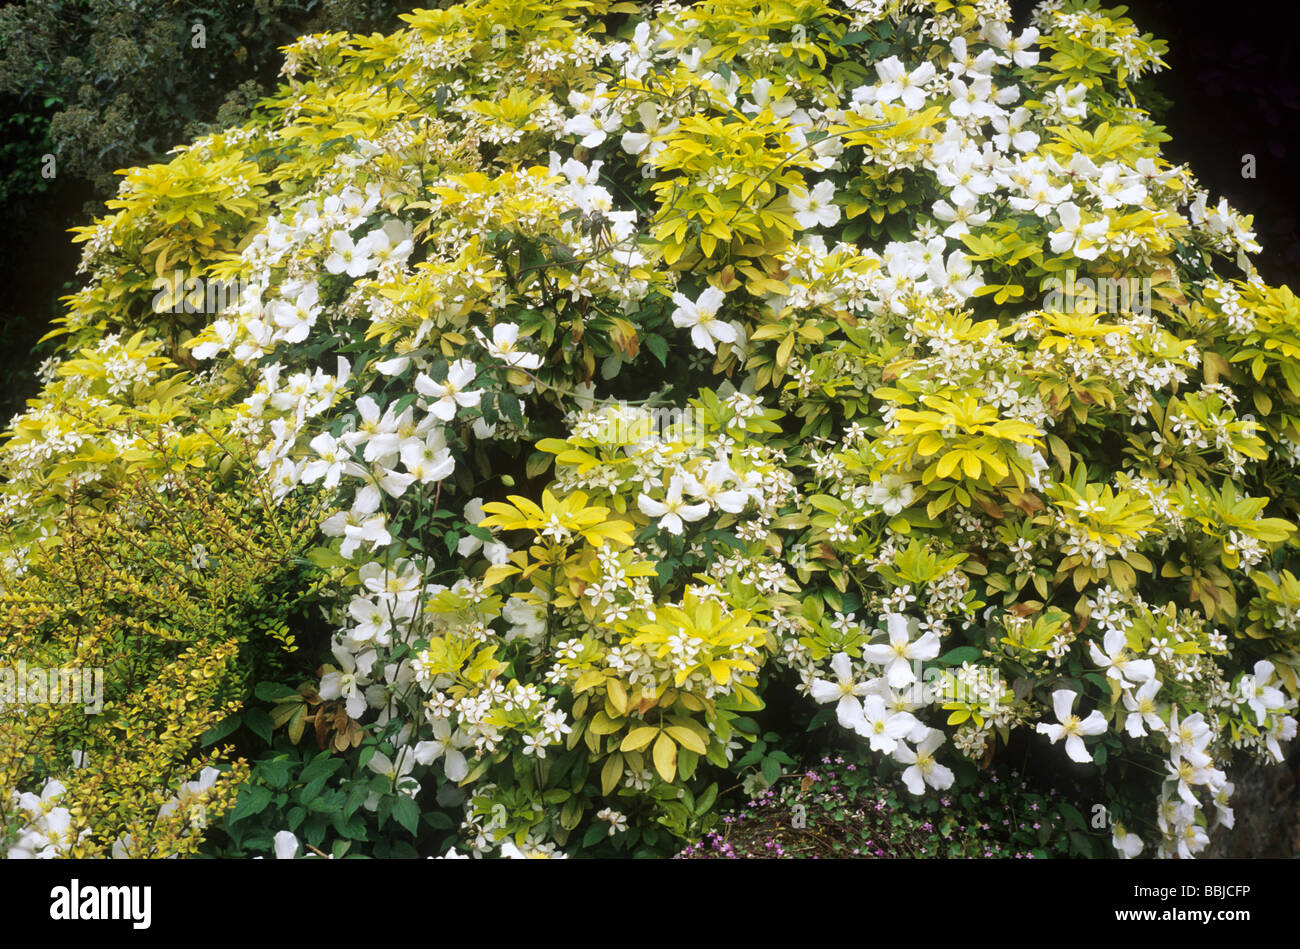 Choisya ternata 'Sundance' and Clematis montana, yellow and white flower flowers colour combination garden plant plants Stock Photo